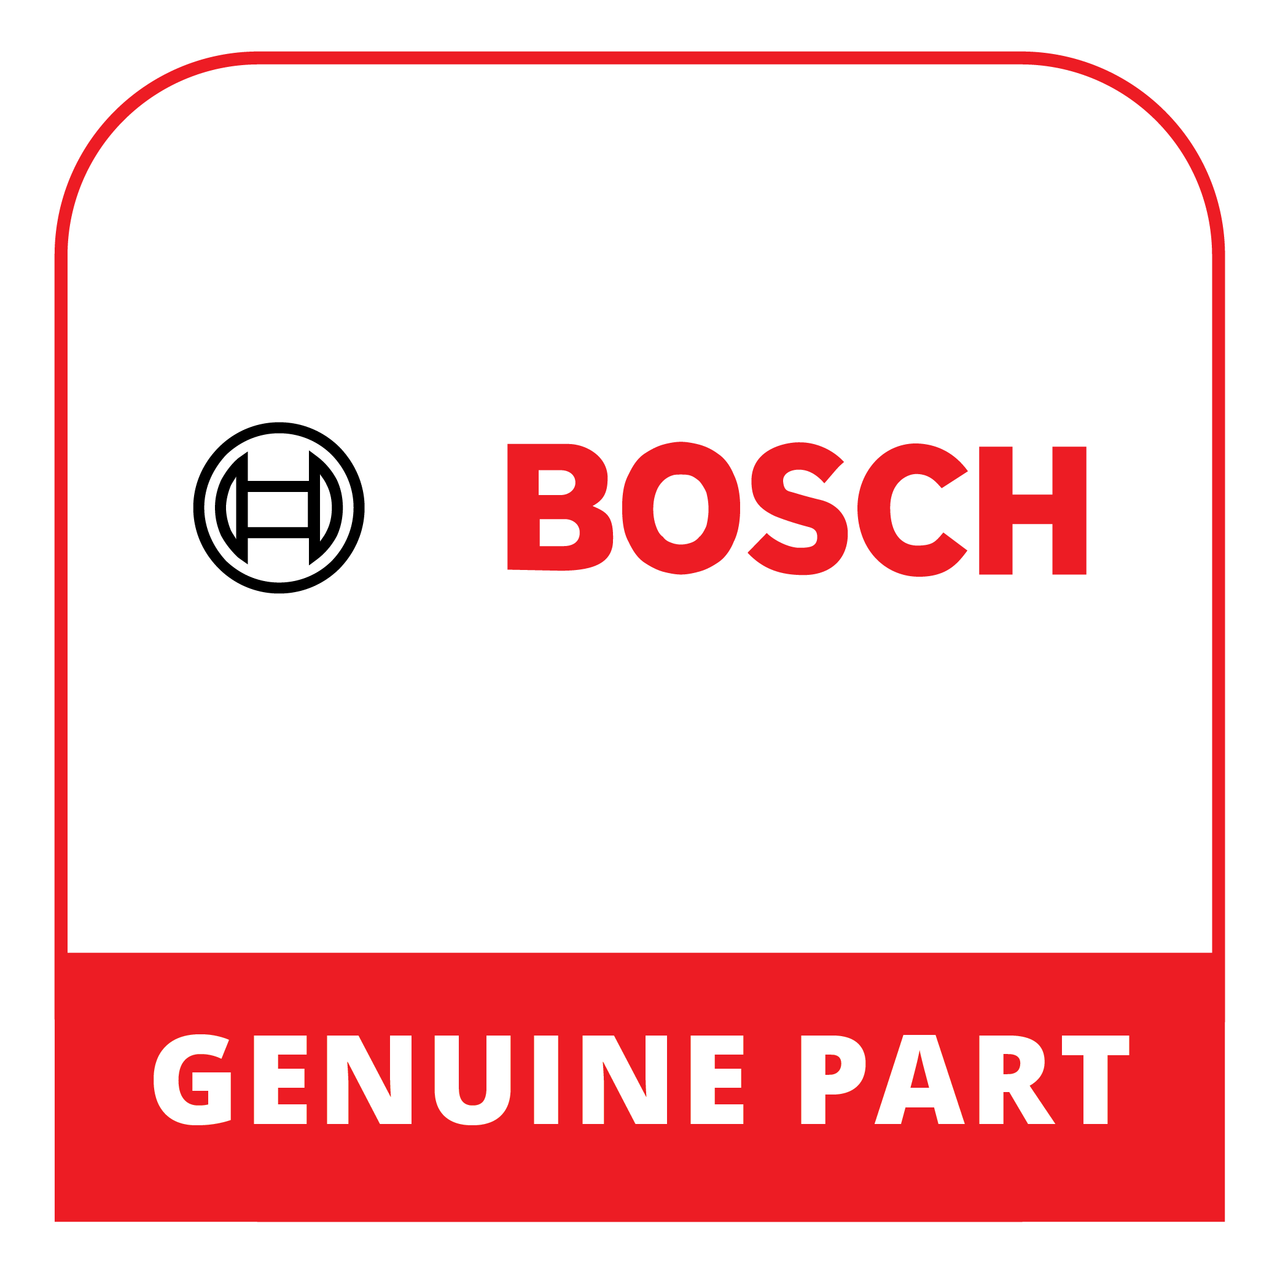 Bosch (Thermador) 20001907 - Freezer Basket - Genuine Bosch (Thermador) Part